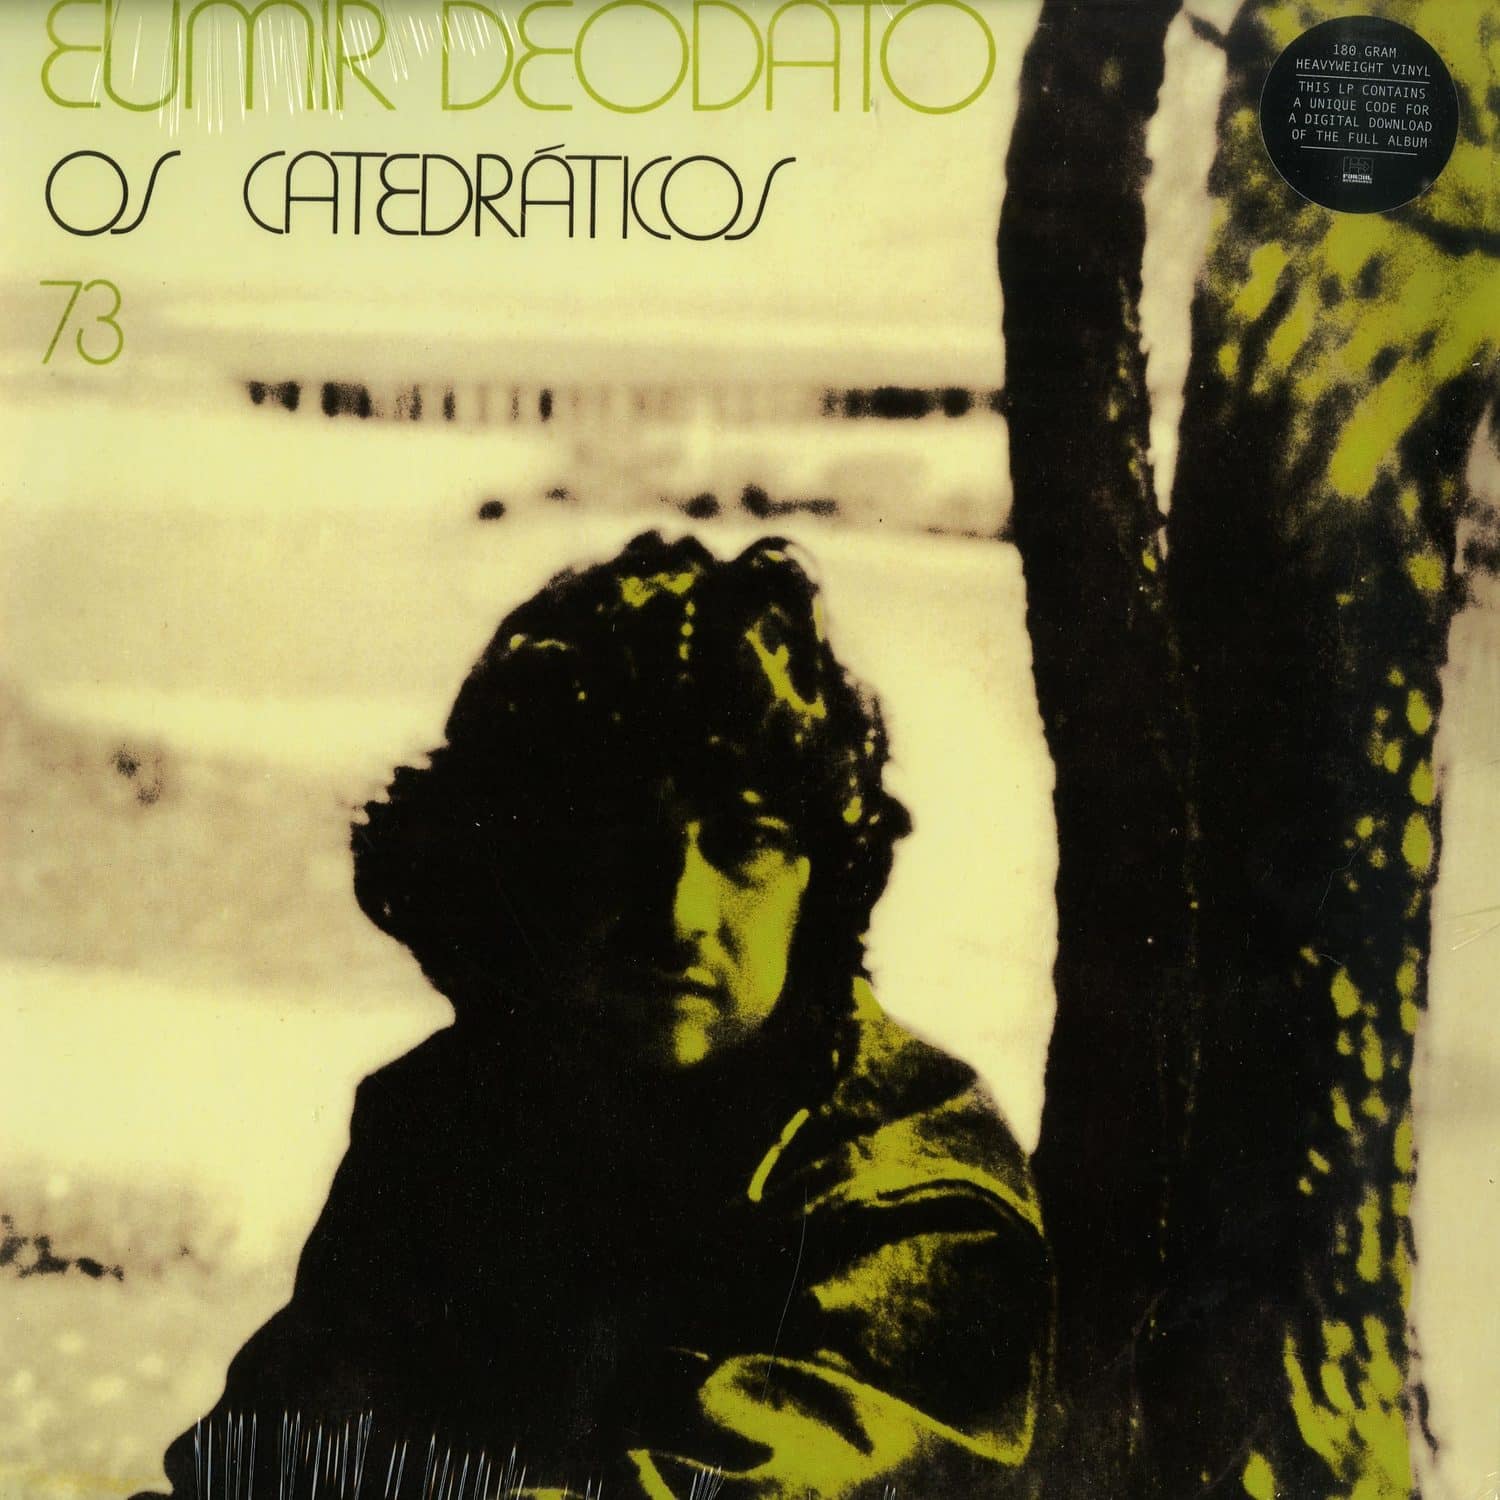 Eumir Deodato - OS CATEDRATICOS 73 